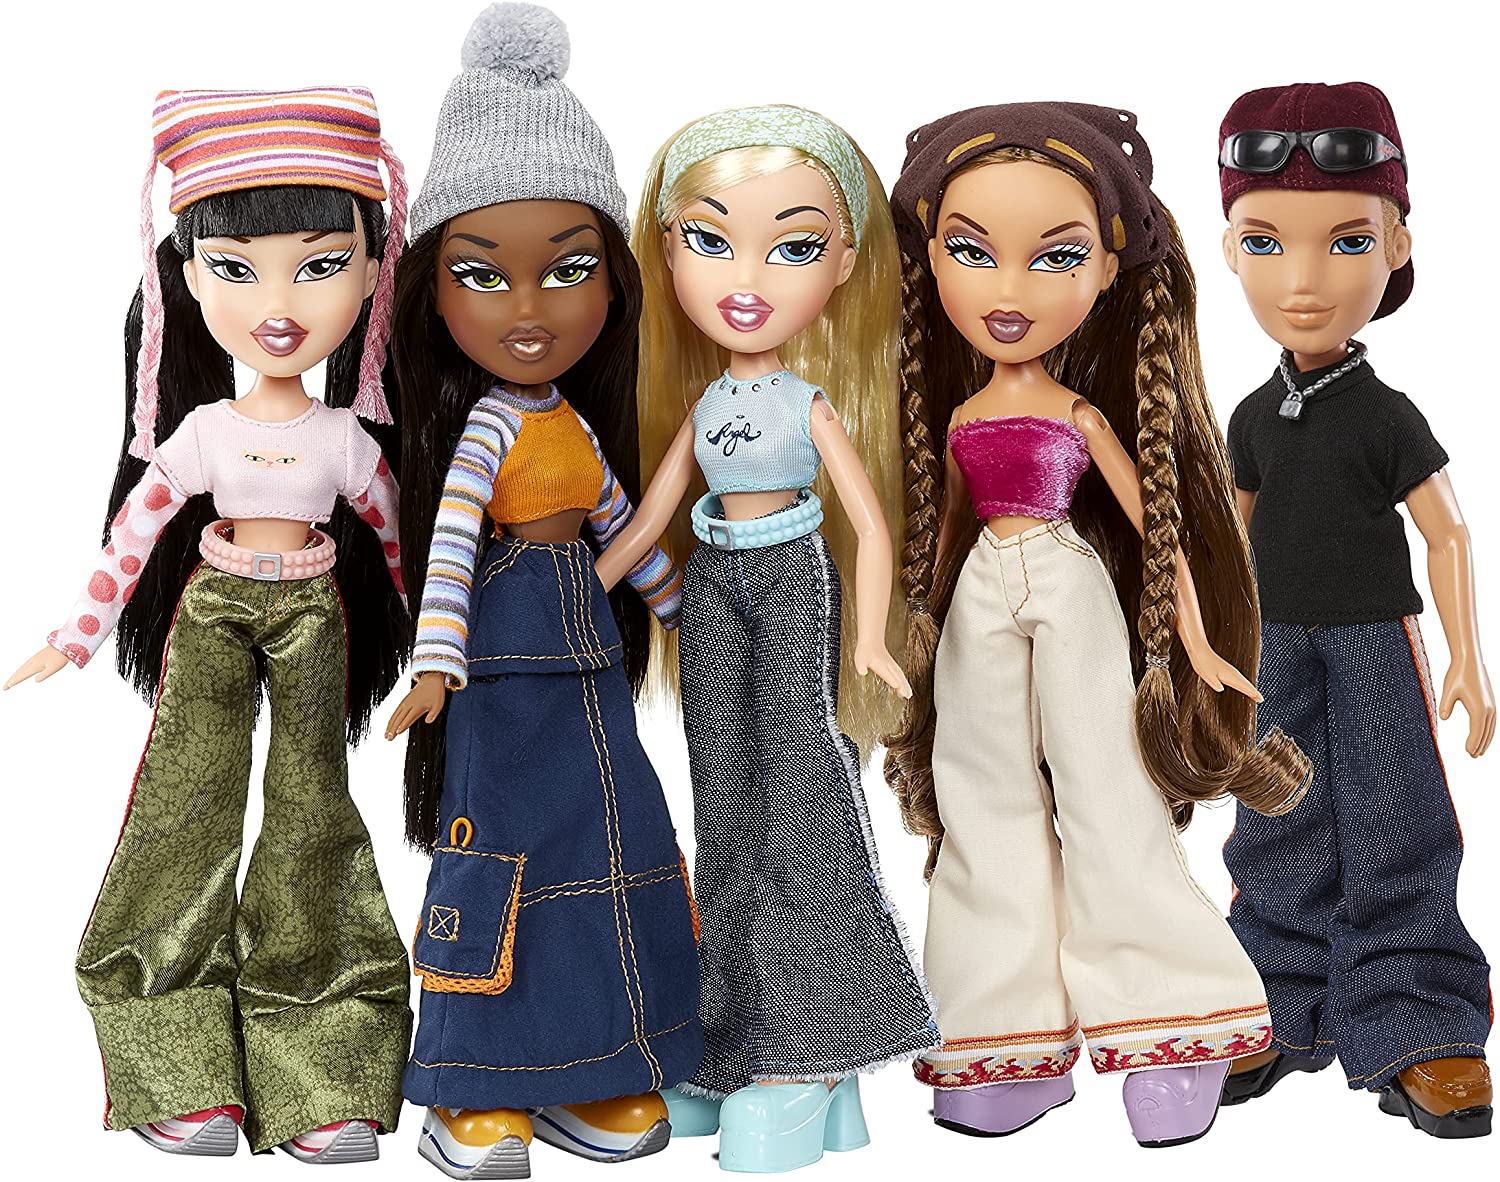 New Bratz 2021 original dolls: Cloe, Sasha, Jade, Yasmin and 